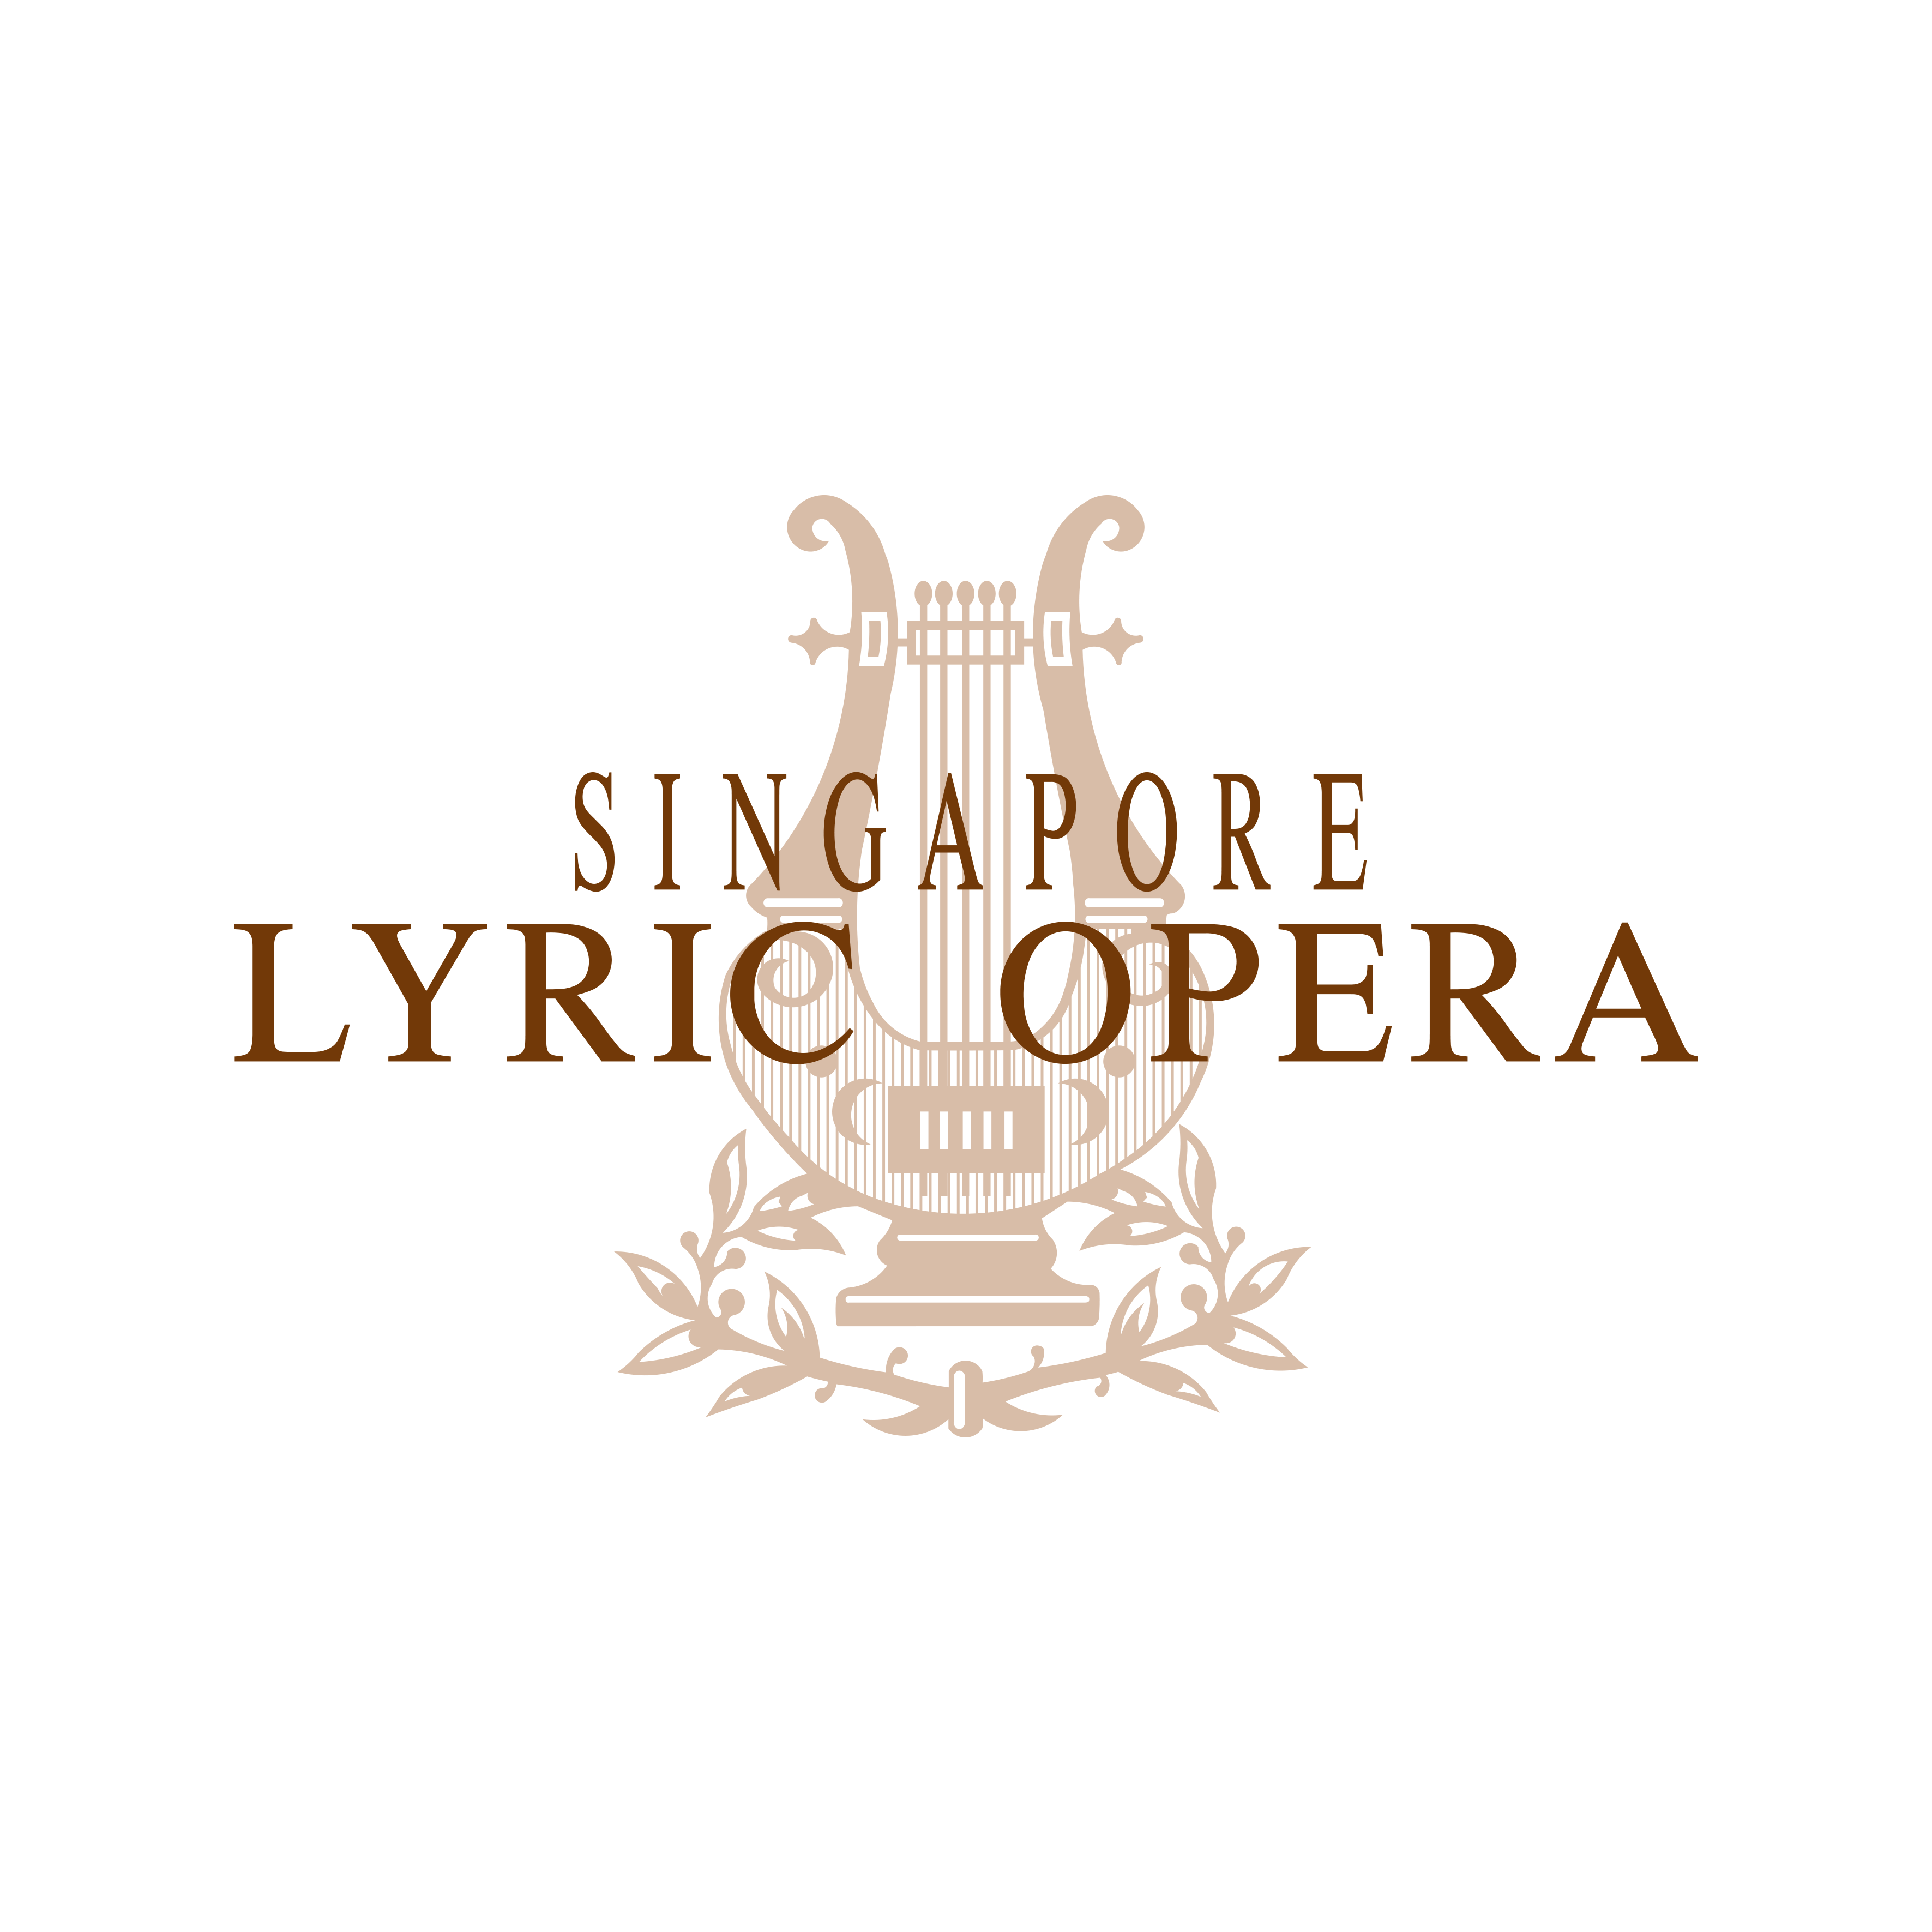 The Singapore Lyric Opera Limited